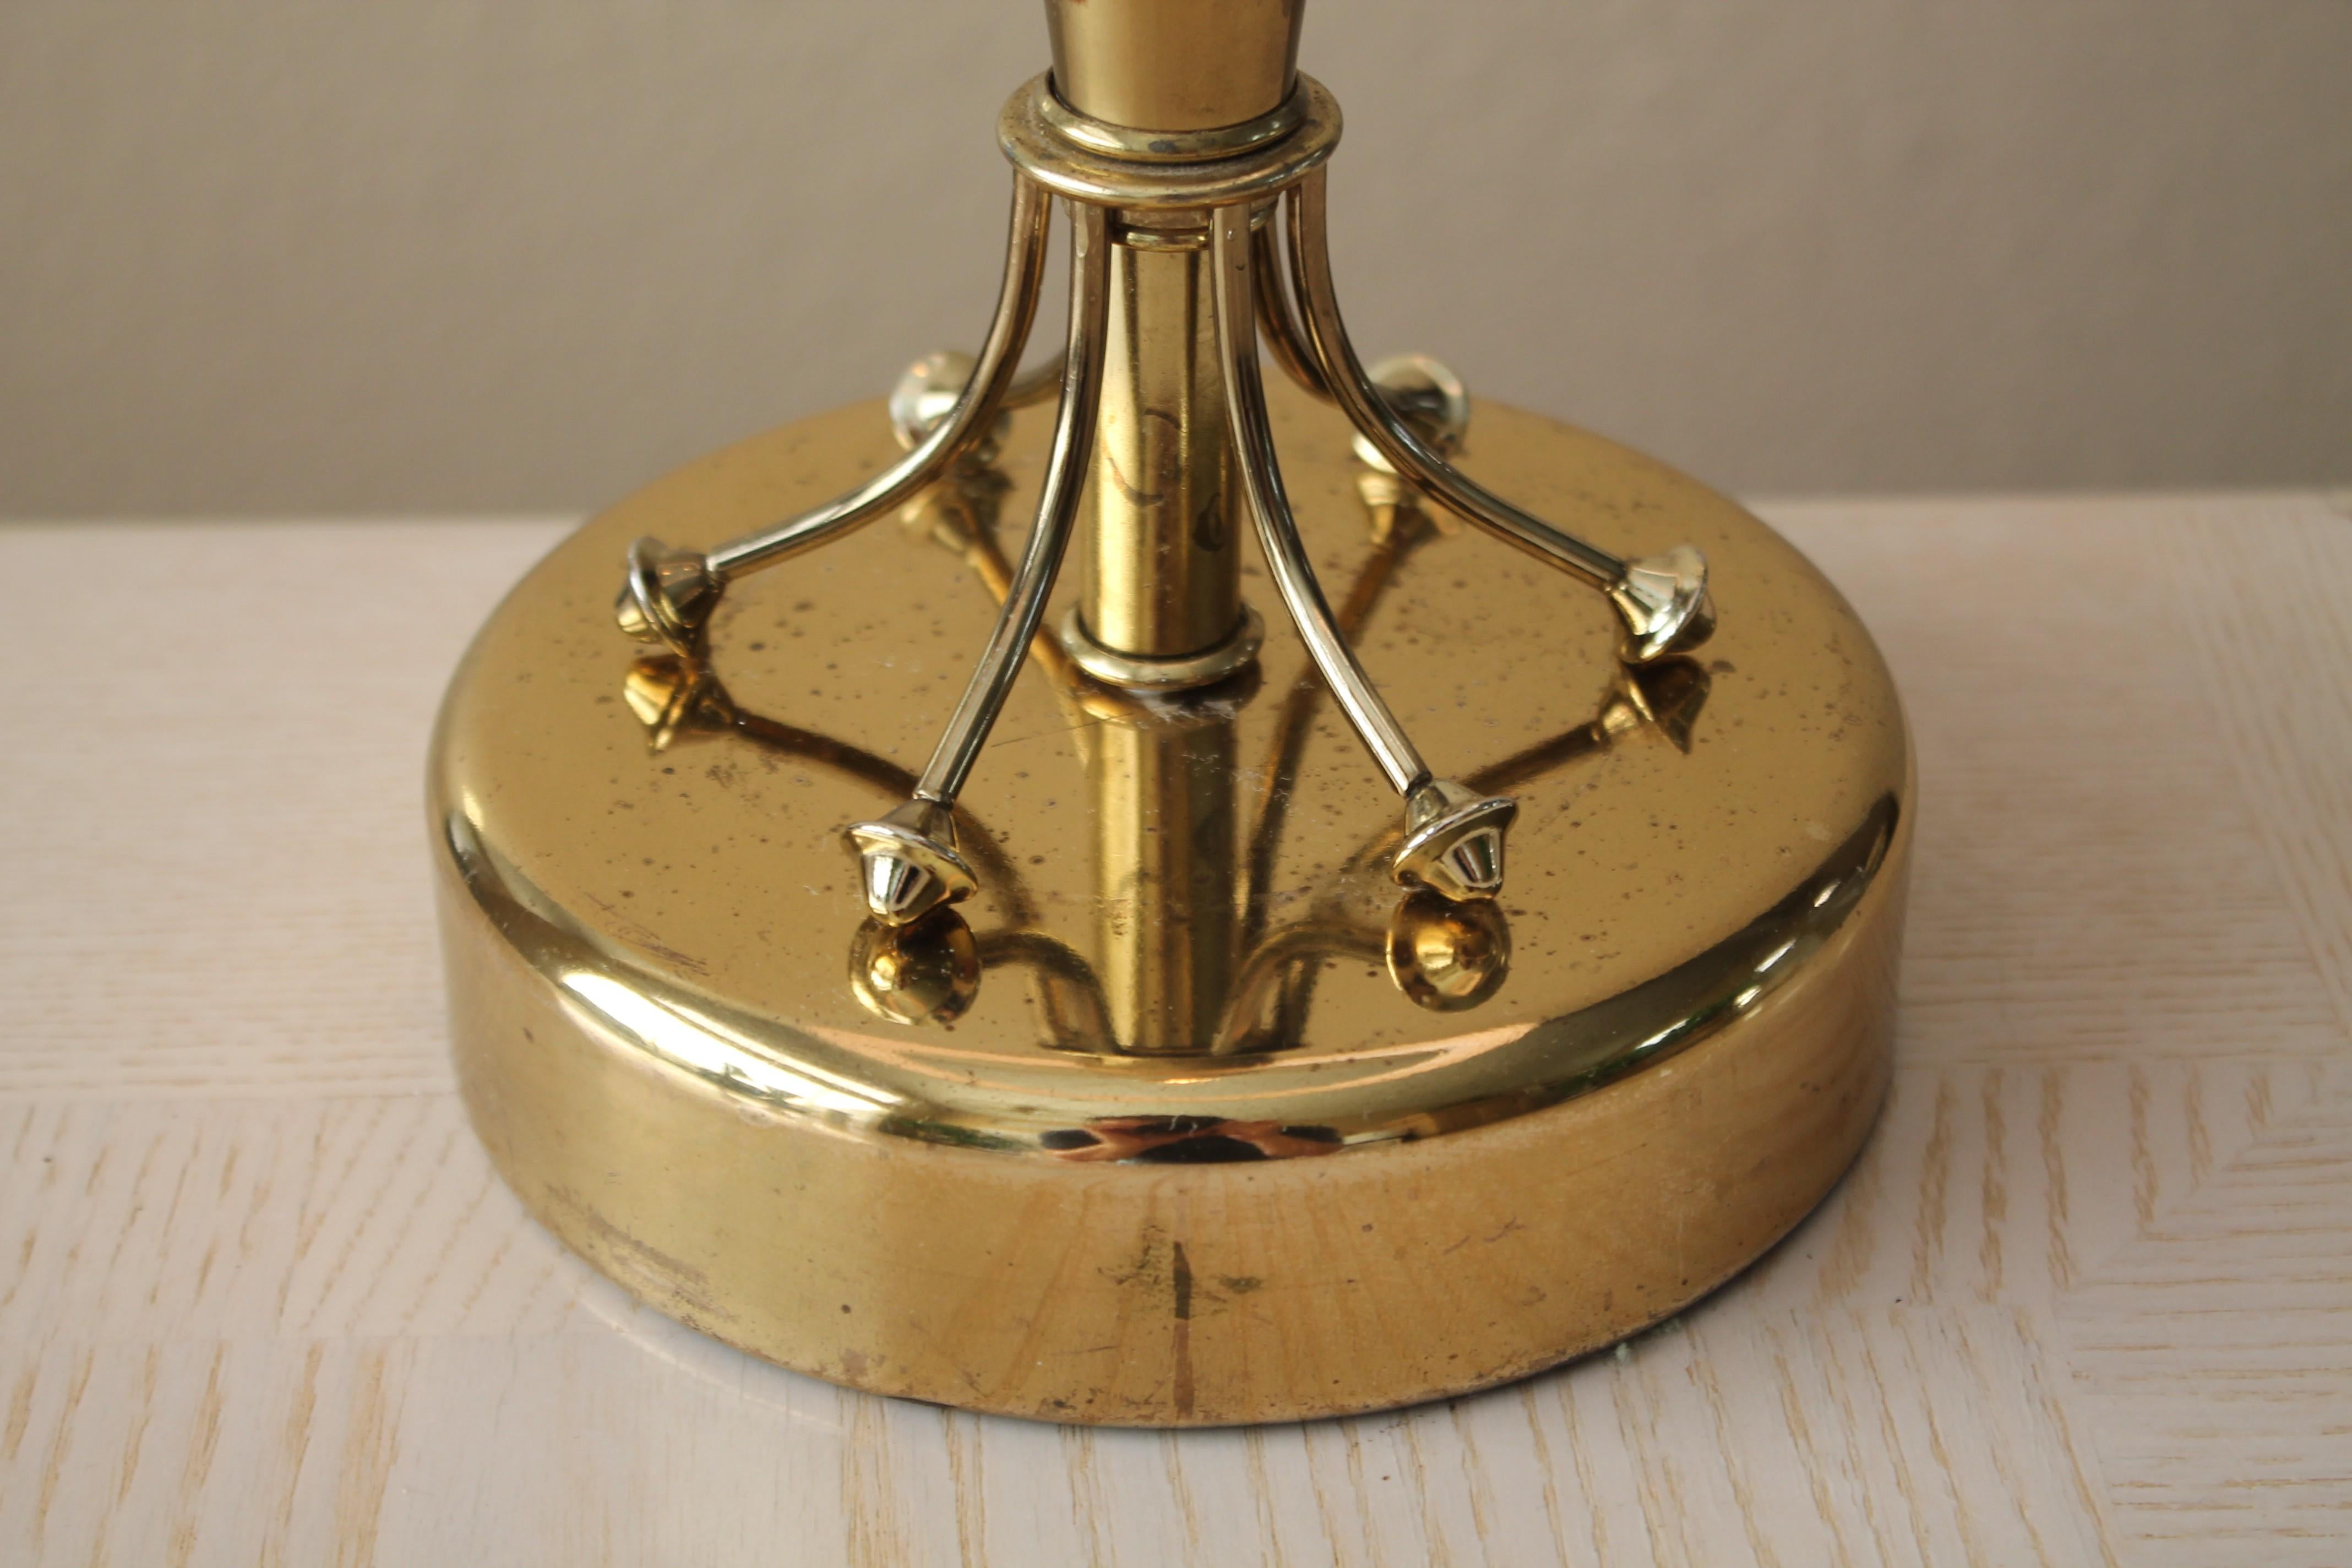 American Mid Century Modern Atomic Brass Rocket Table Lamp 1950s Sputnik Torpedo Shape For Sale